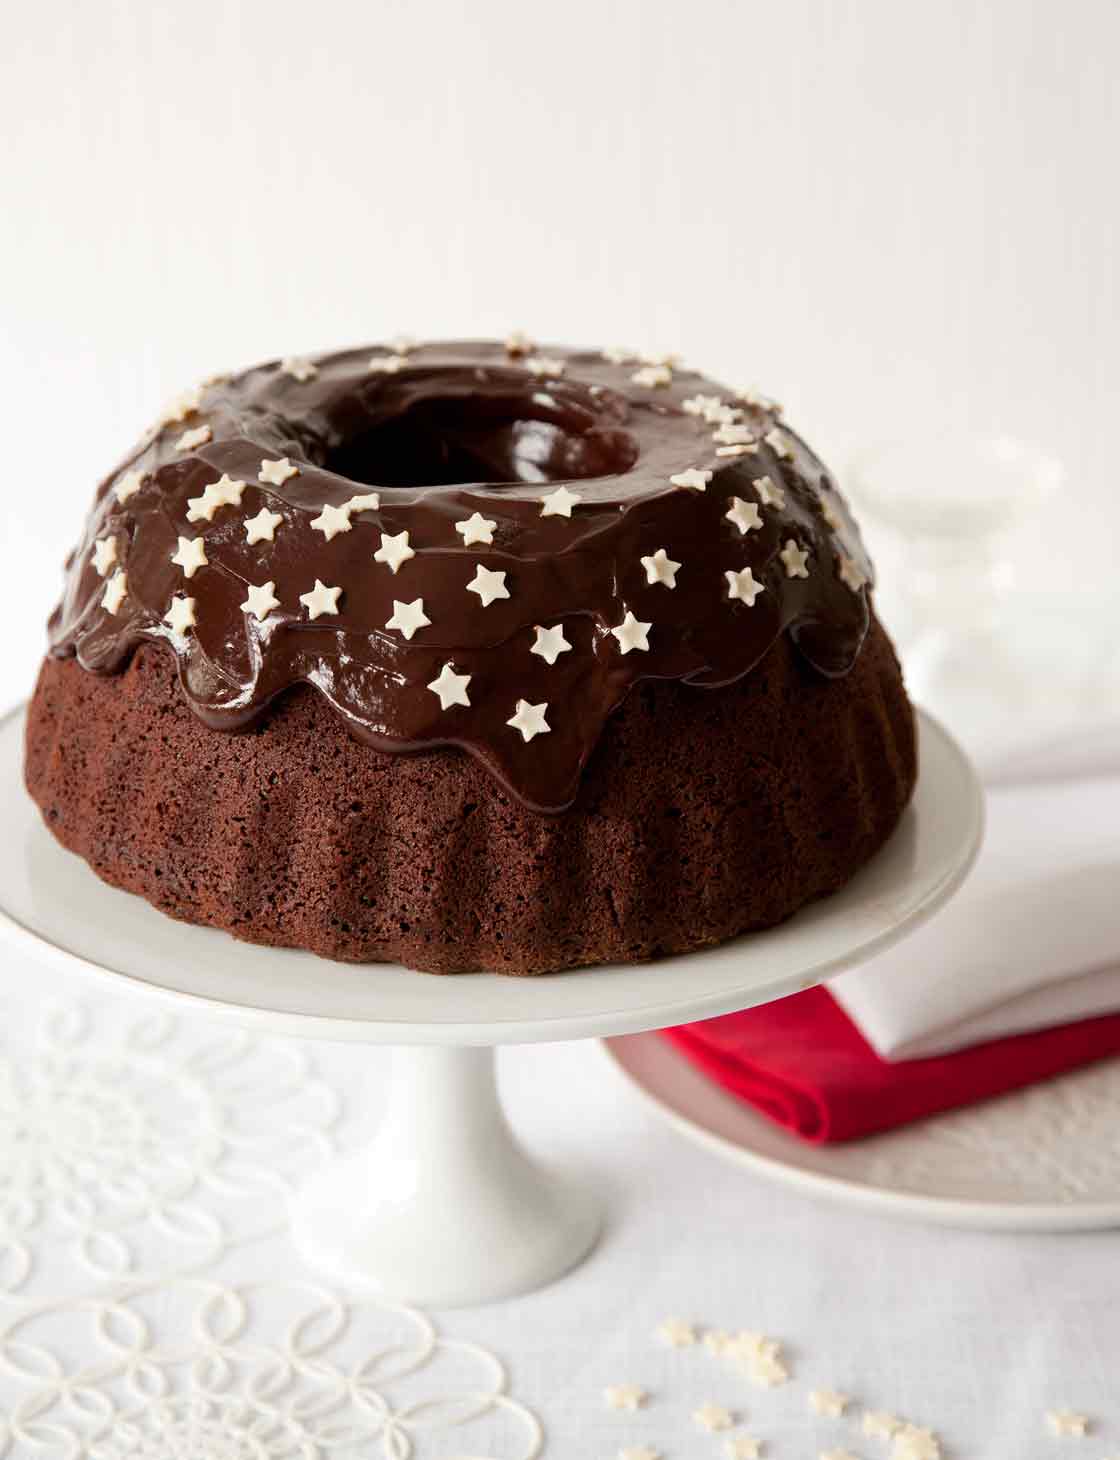 Spiced chocolate cake with chocolate icing | Sainsbury's Magazine